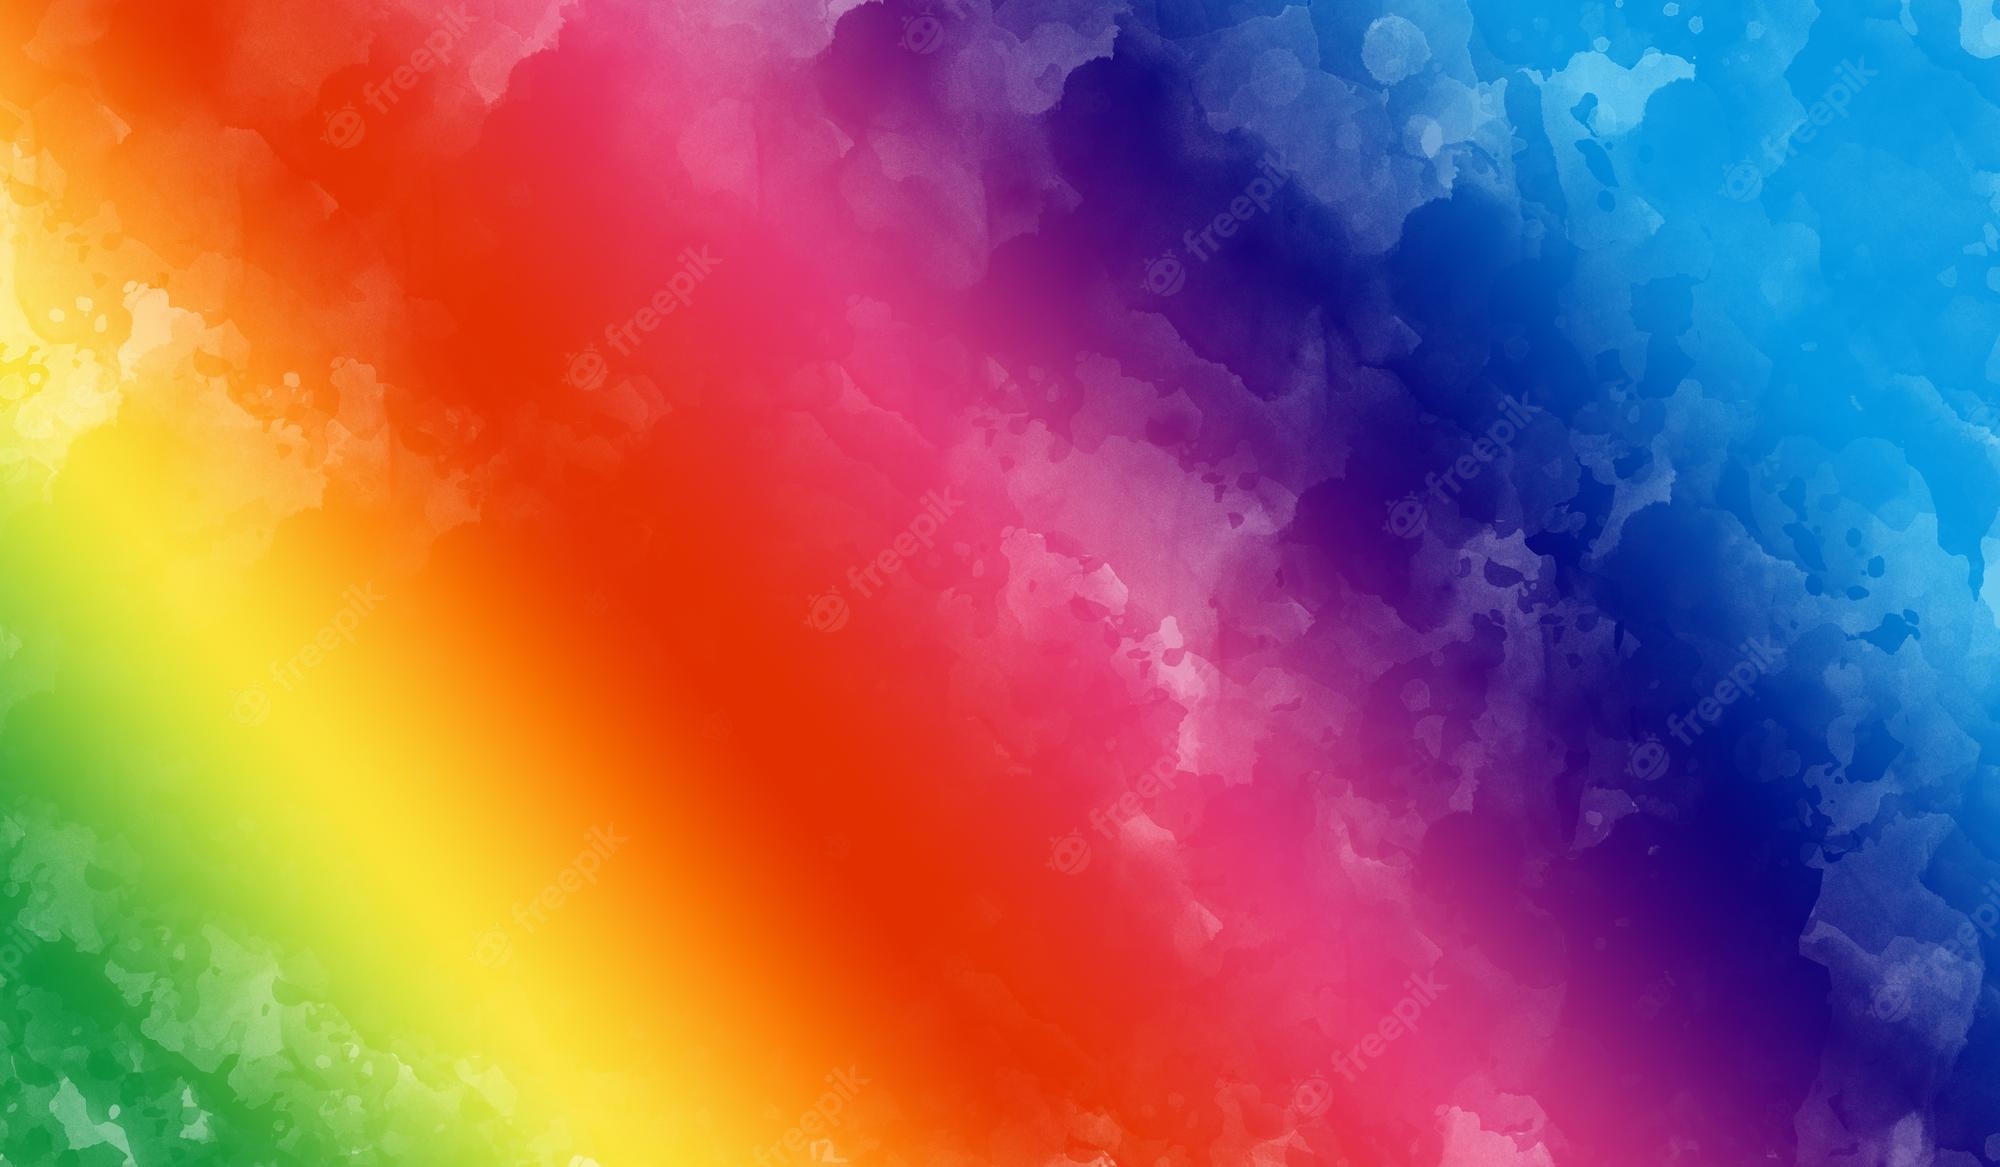 Awesome Rainbow Backgrounds